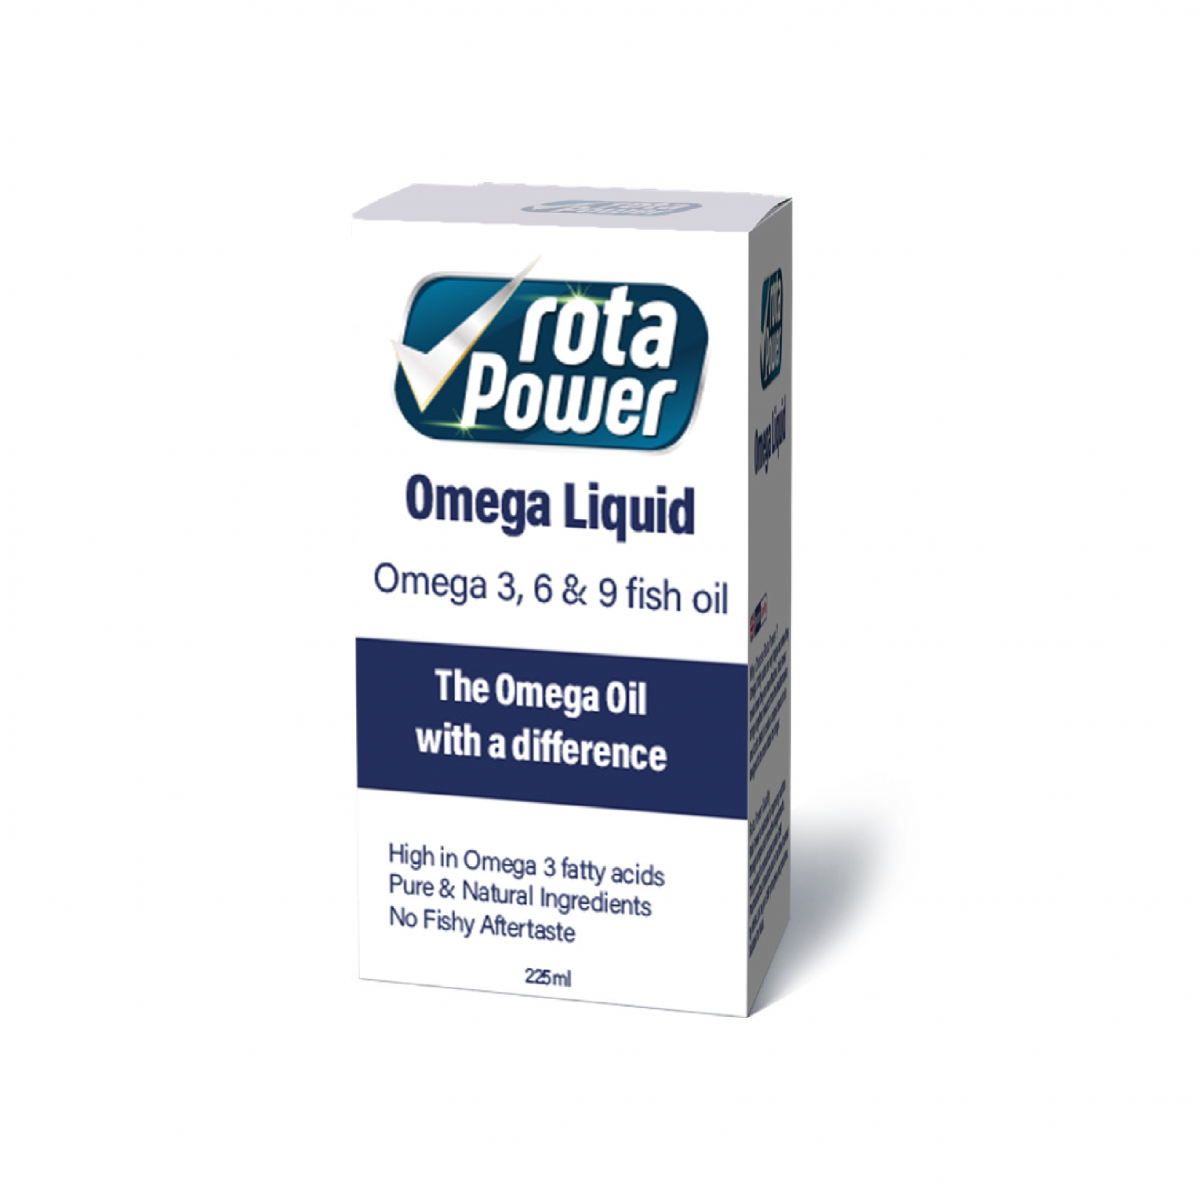 rota power omega liquid